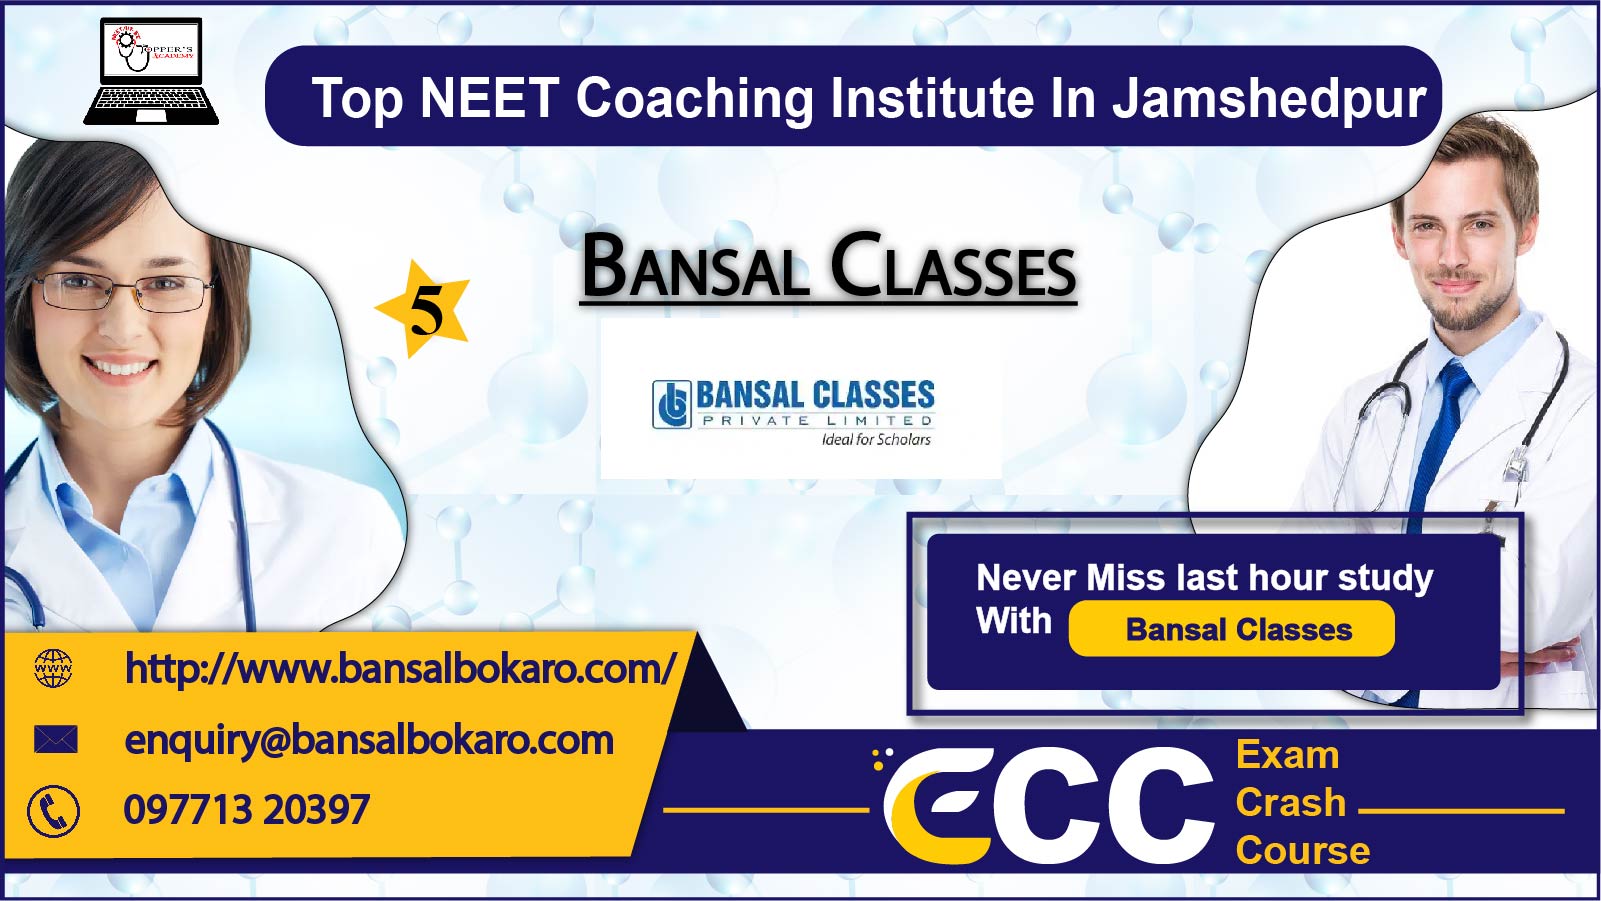 Bansal NEET Academy in Jamshedpur